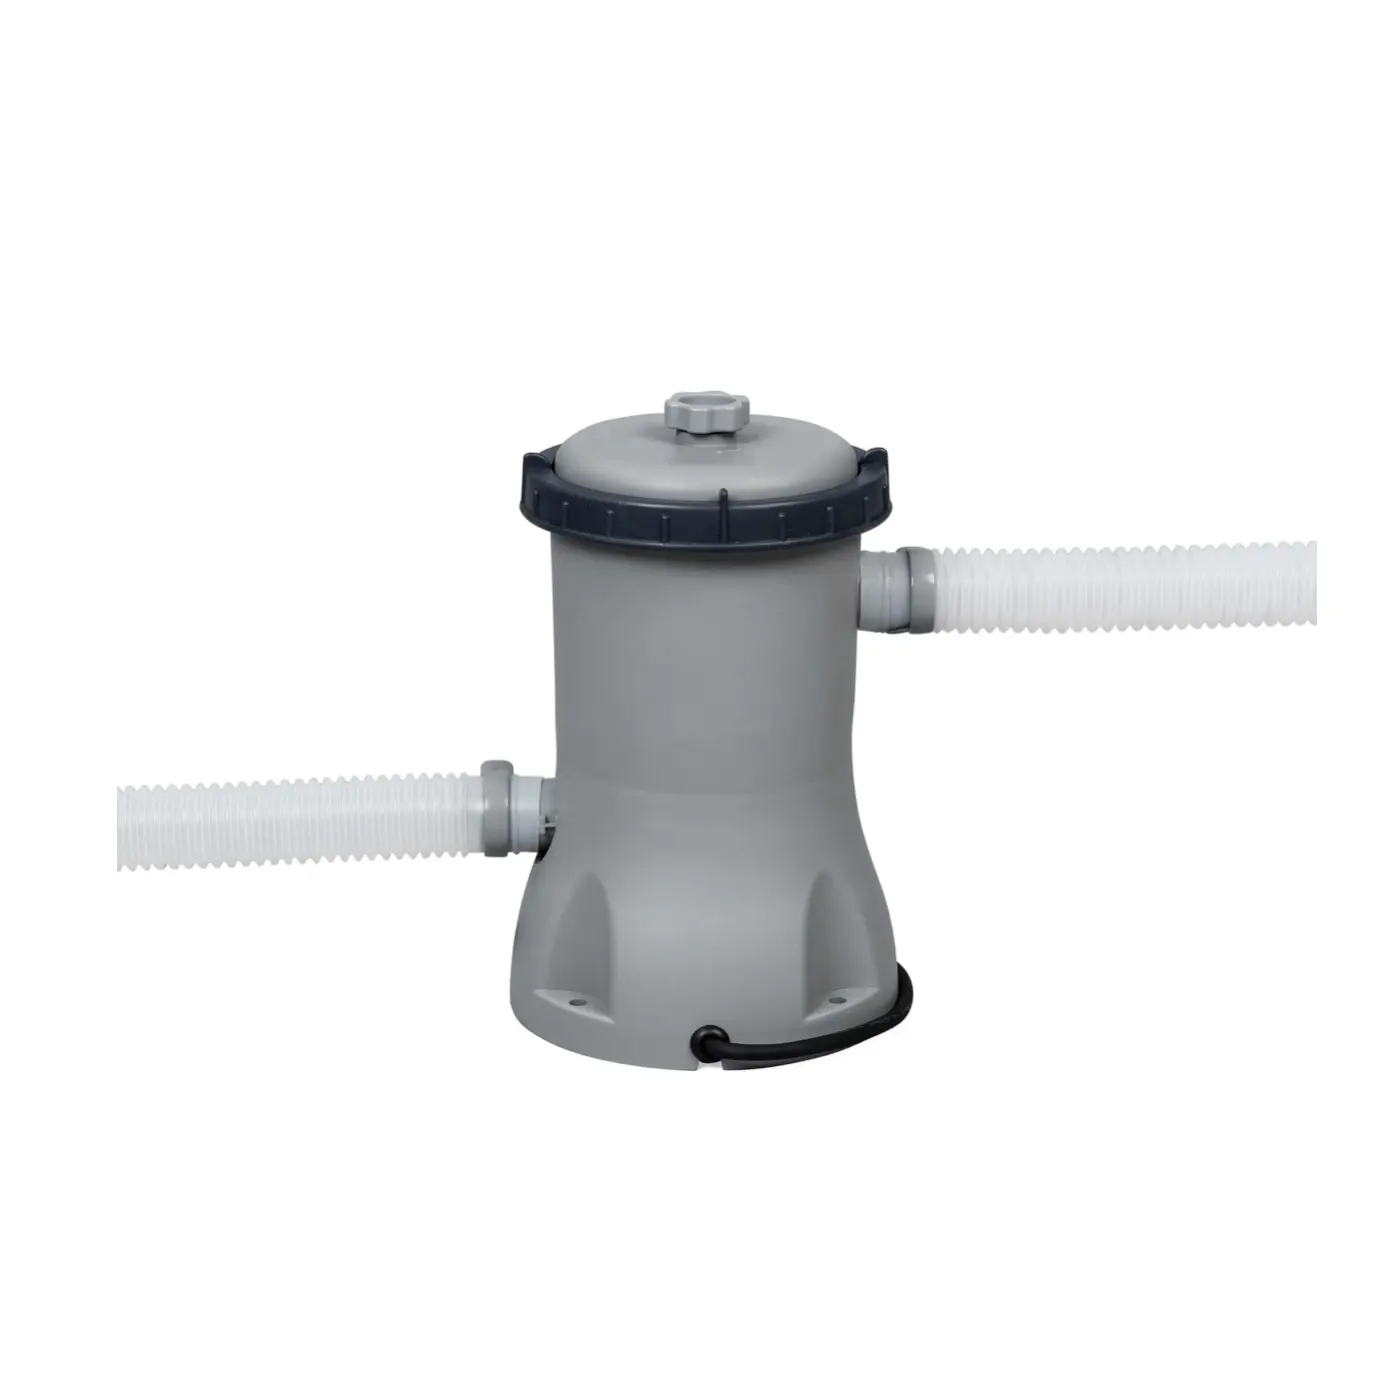 Bestway 58383 New Filter Pump Steel framed water filter cartridge for 530gal Filter Pump